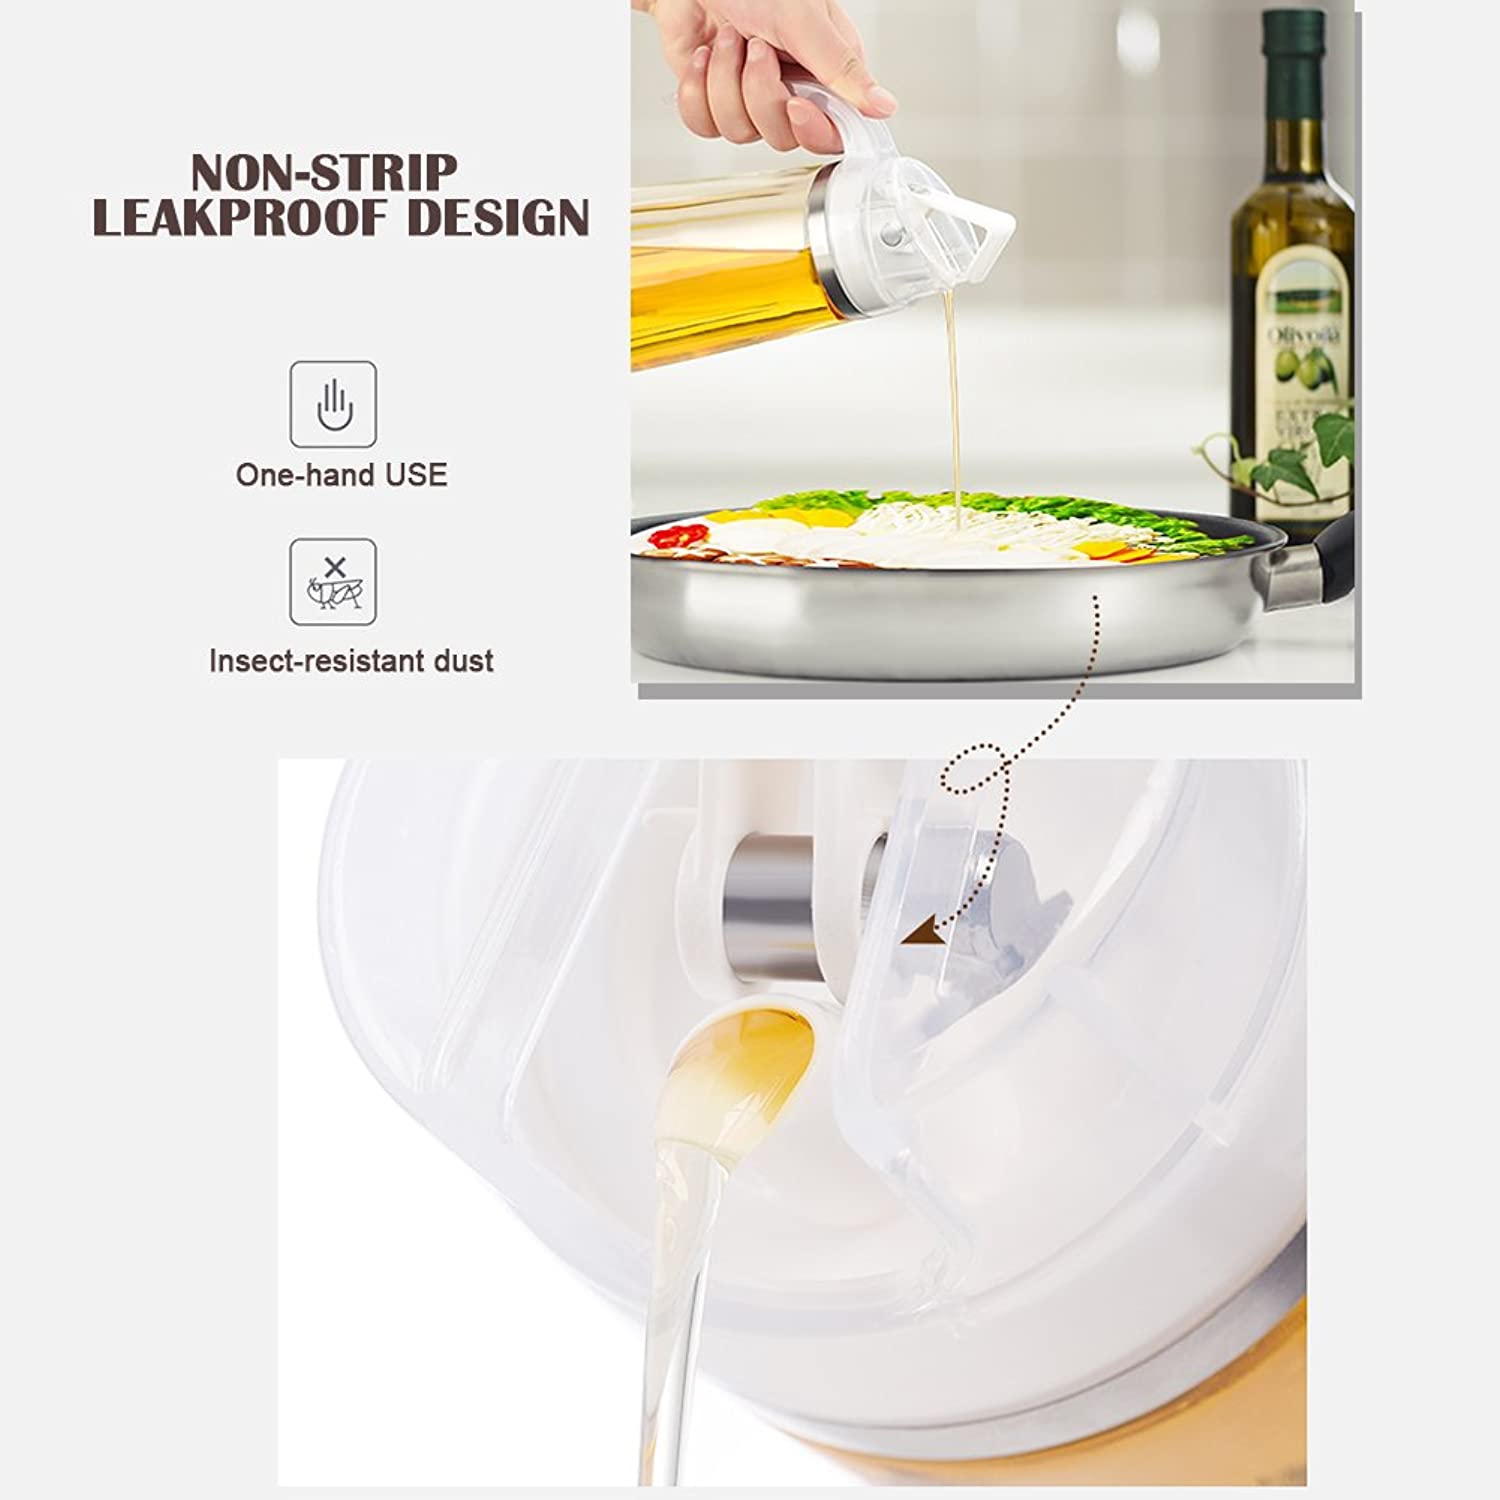 Auto Flip Olive Oil Dispenser Bottle Leak Proof Condiment